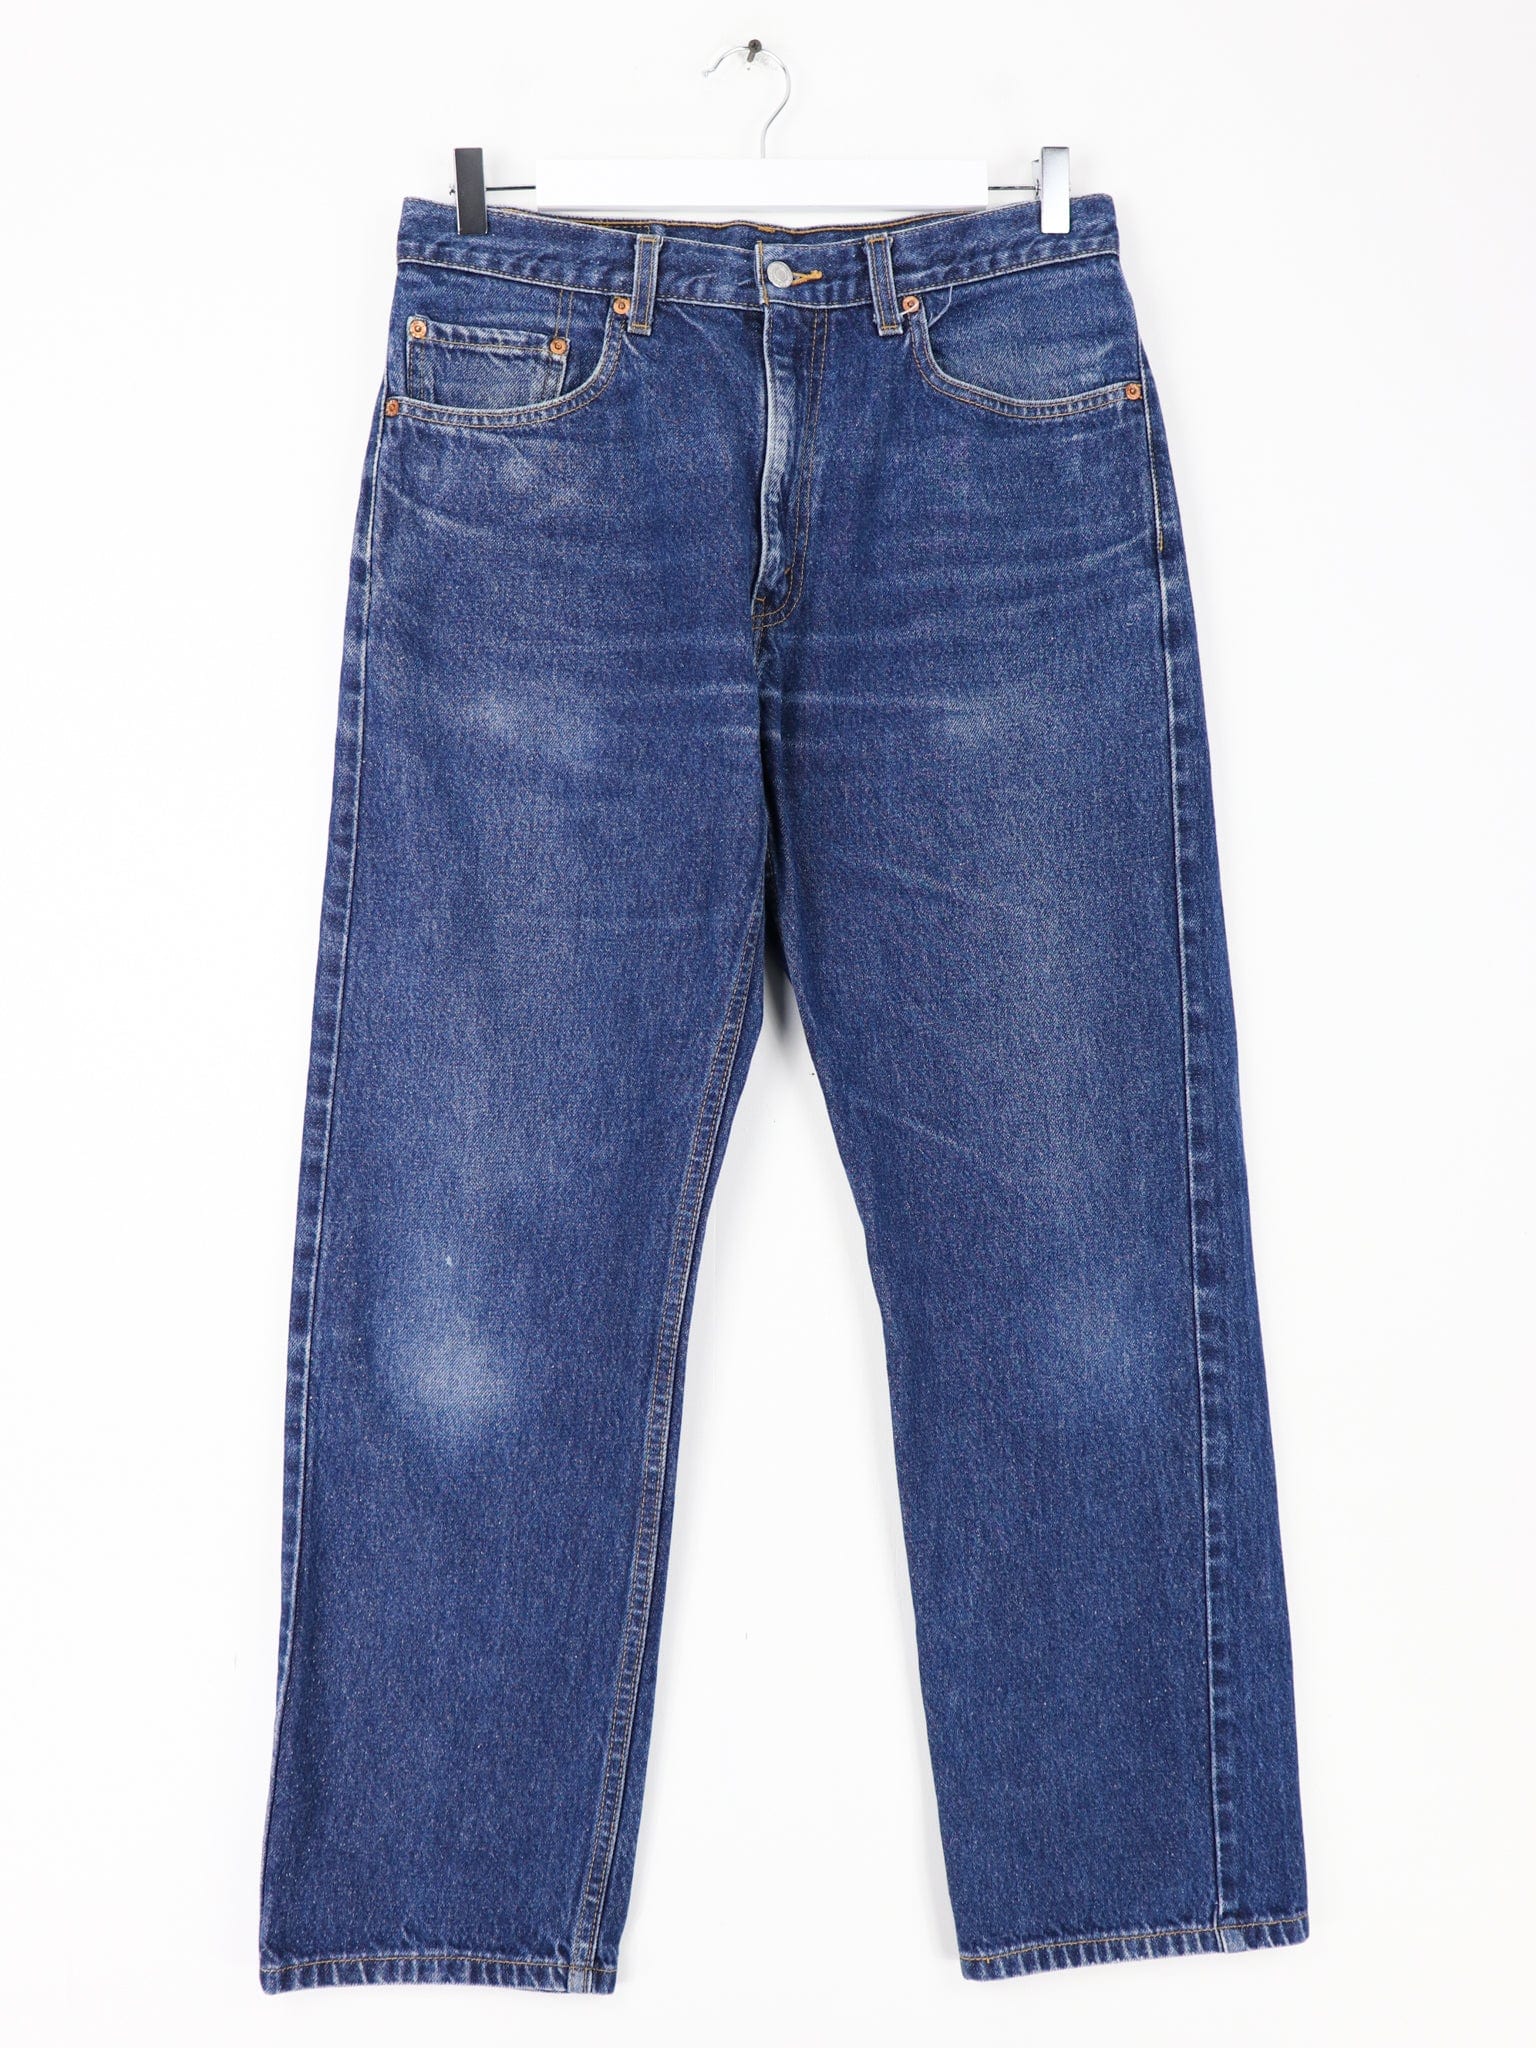 Vintage Levi's 505 Loose Regular Straight Denim Jeans Size 34 x 30 Fit